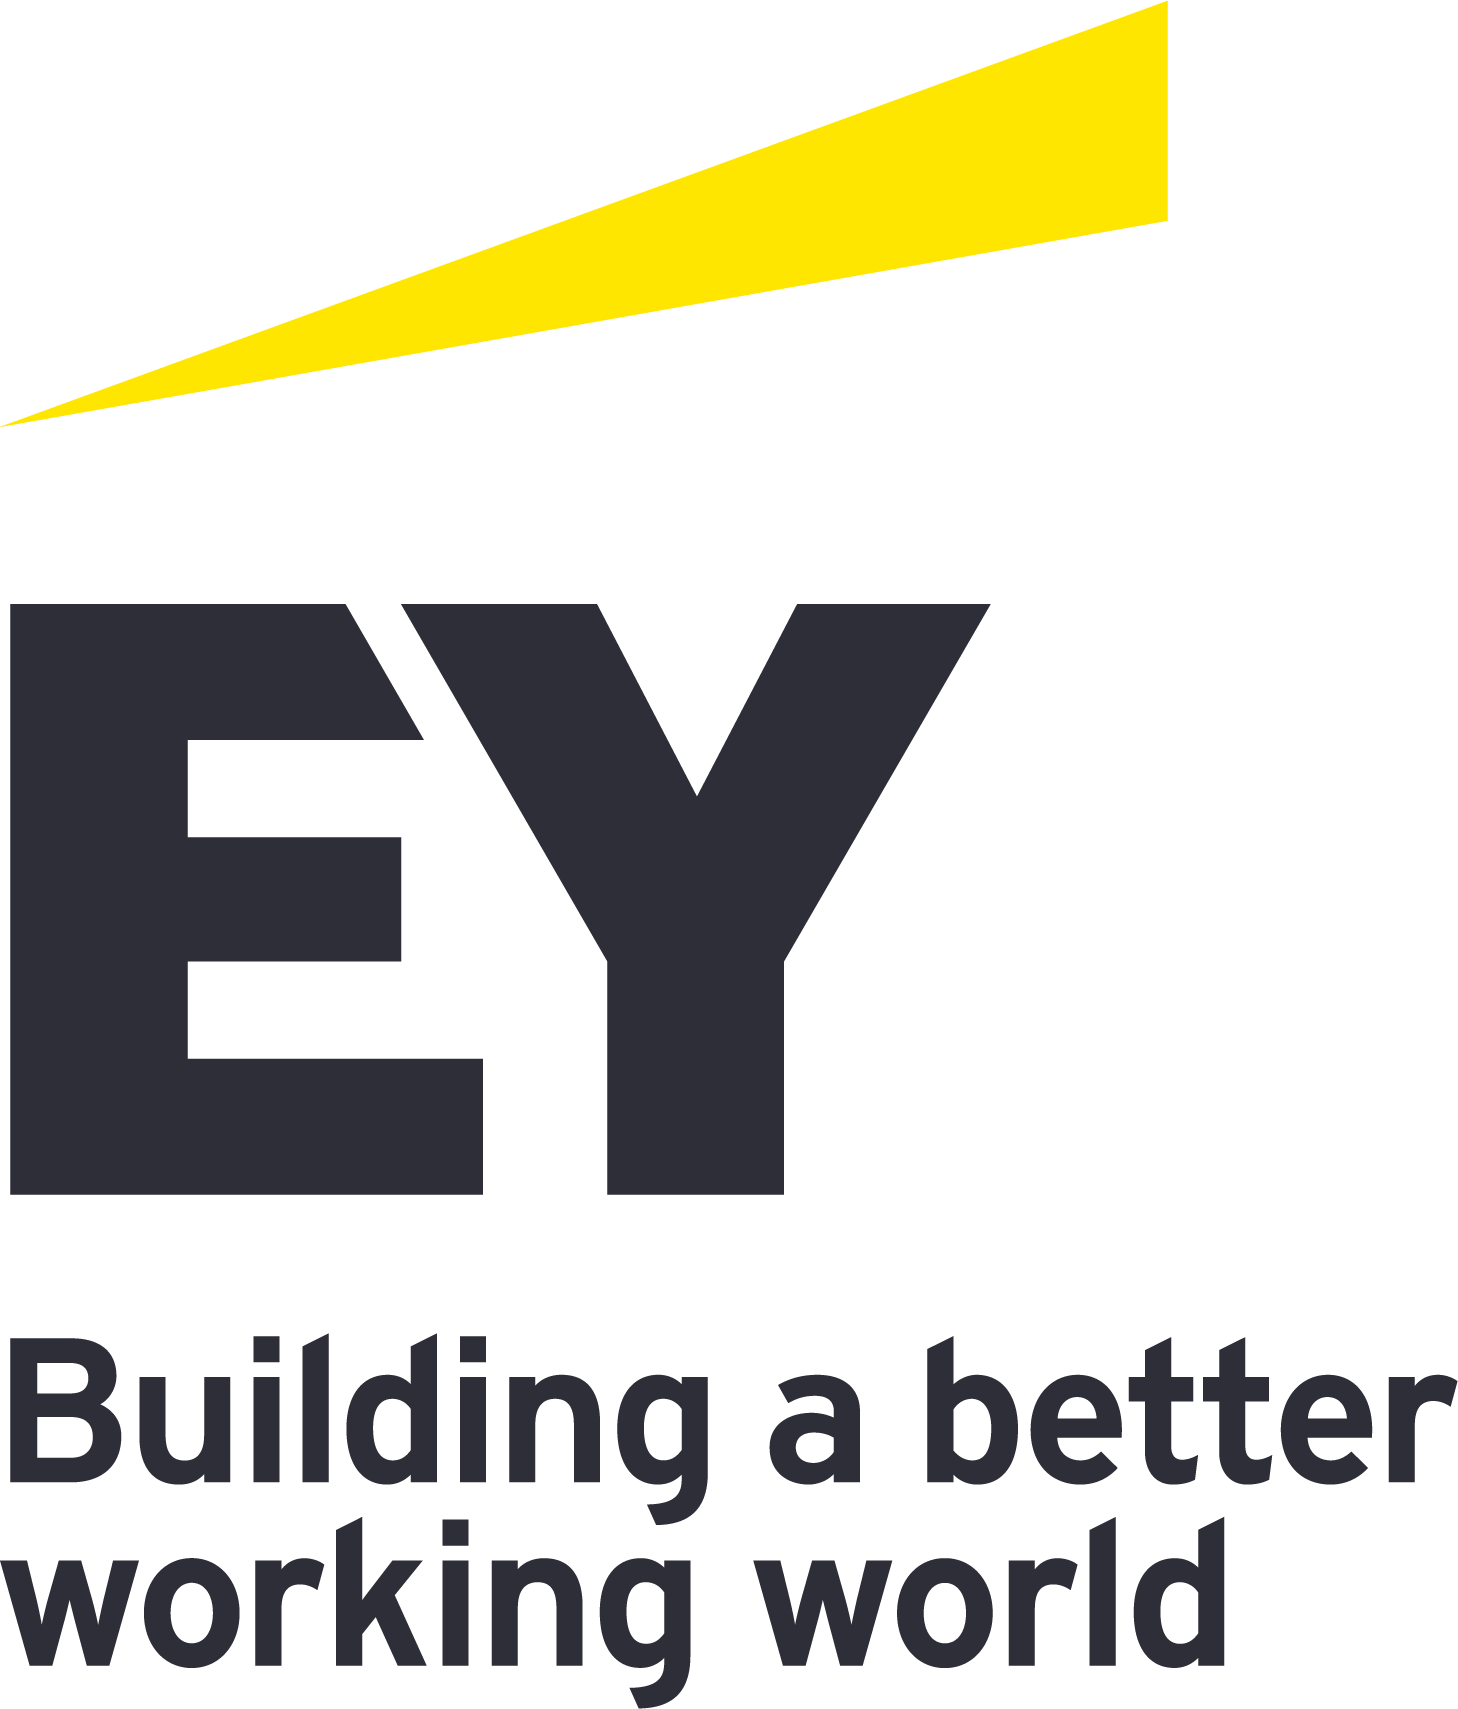 ey_logo_beam_tag_stacked_rgb_offblack_yellow.png (46 KB)